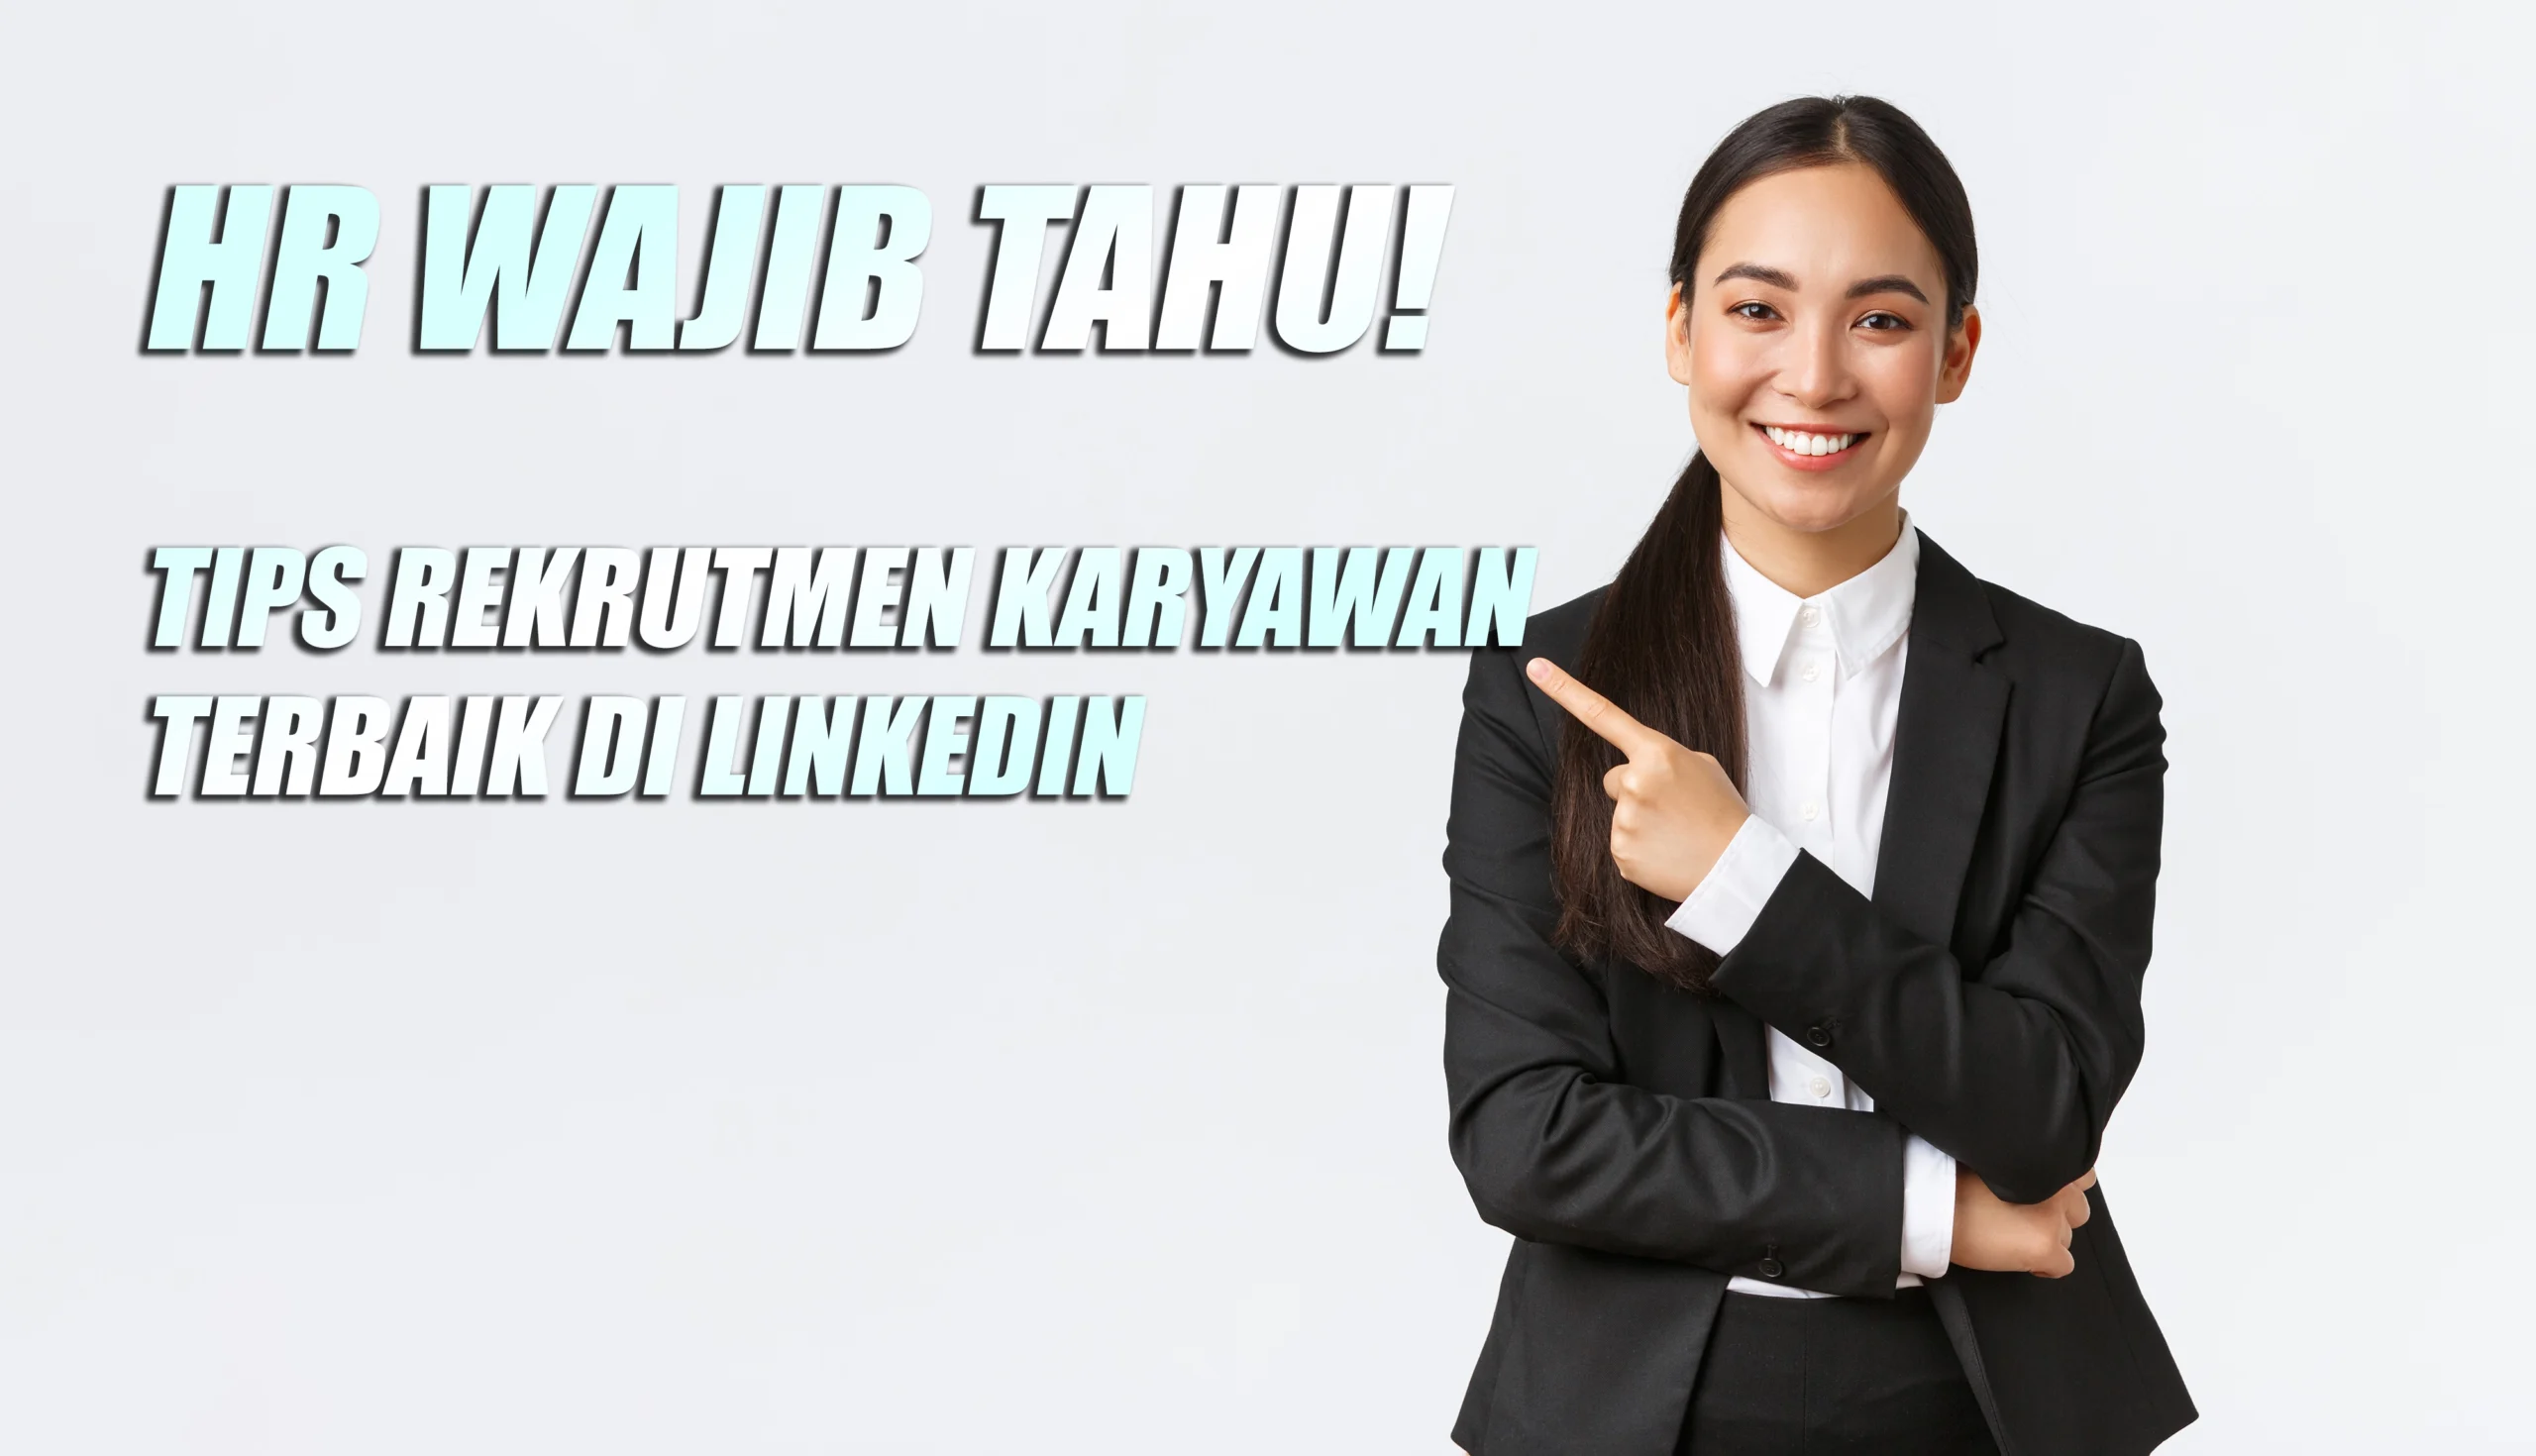 HR Wajib Tahu! Tips Rekrutmen Karyawan Terbaik di Linkedin